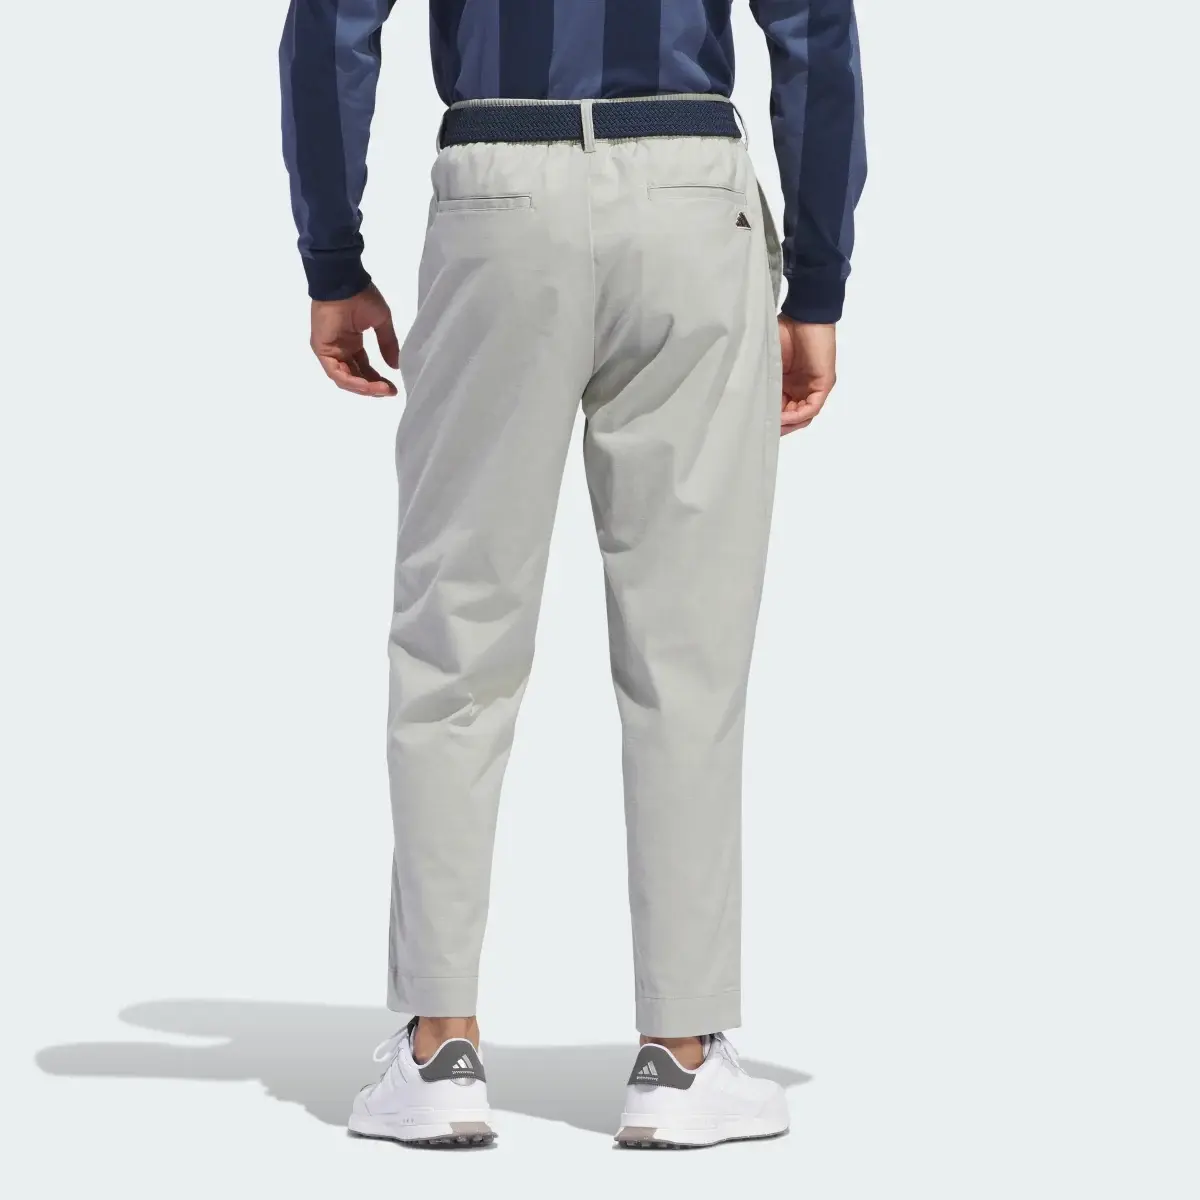 Adidas Go-To Versatile Trousers. 2